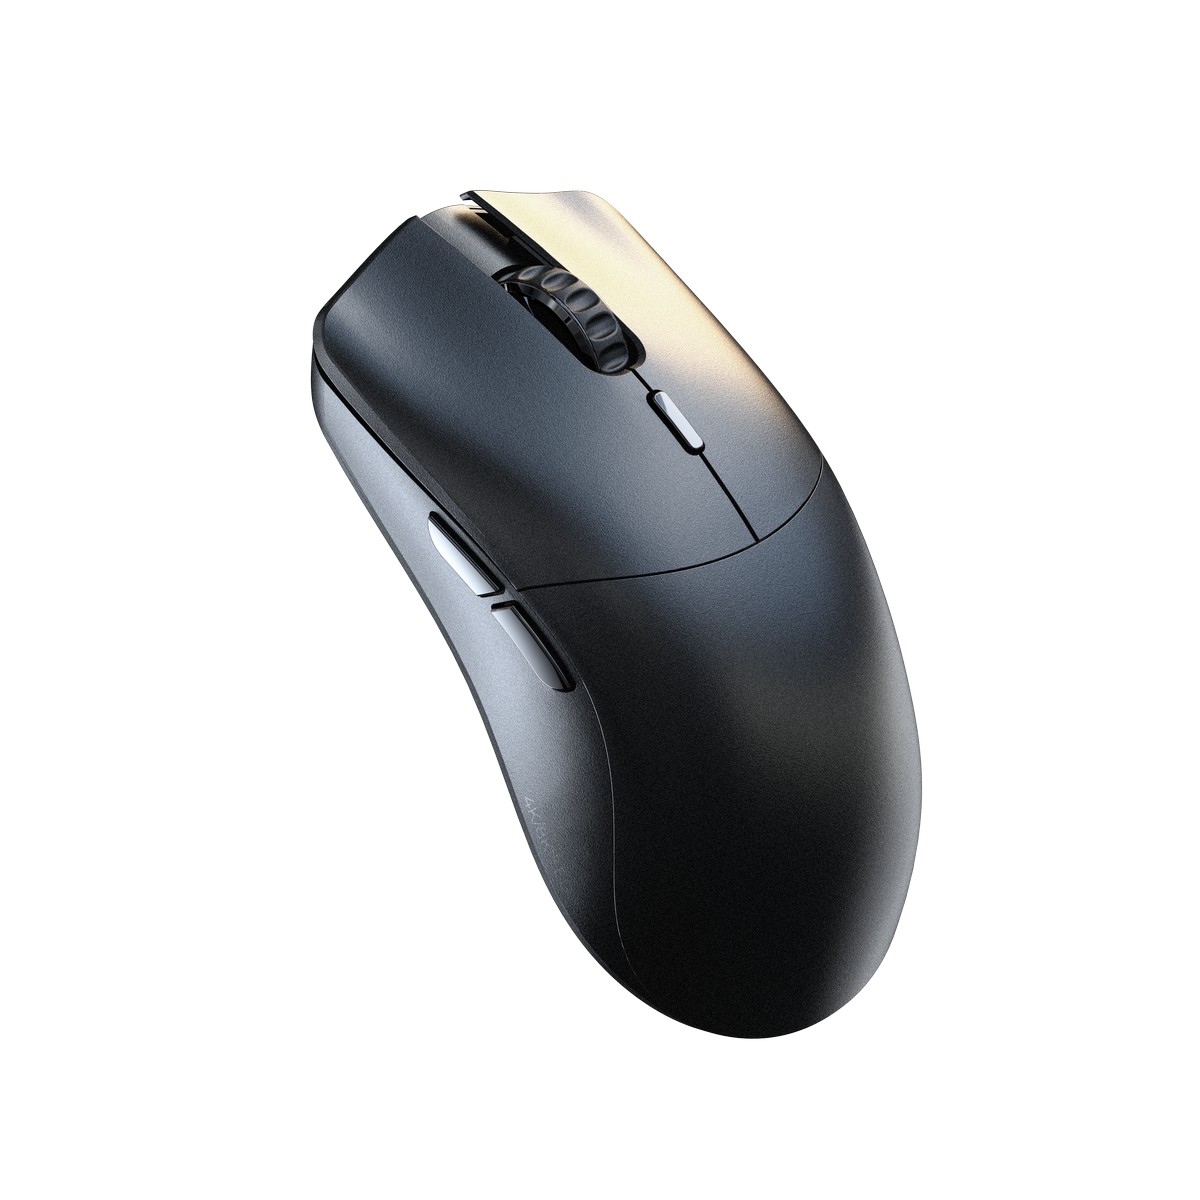 Glorious - Glorious Model O 2 PRO 1K Polling Wireless RGB Gaming Mouse - Black